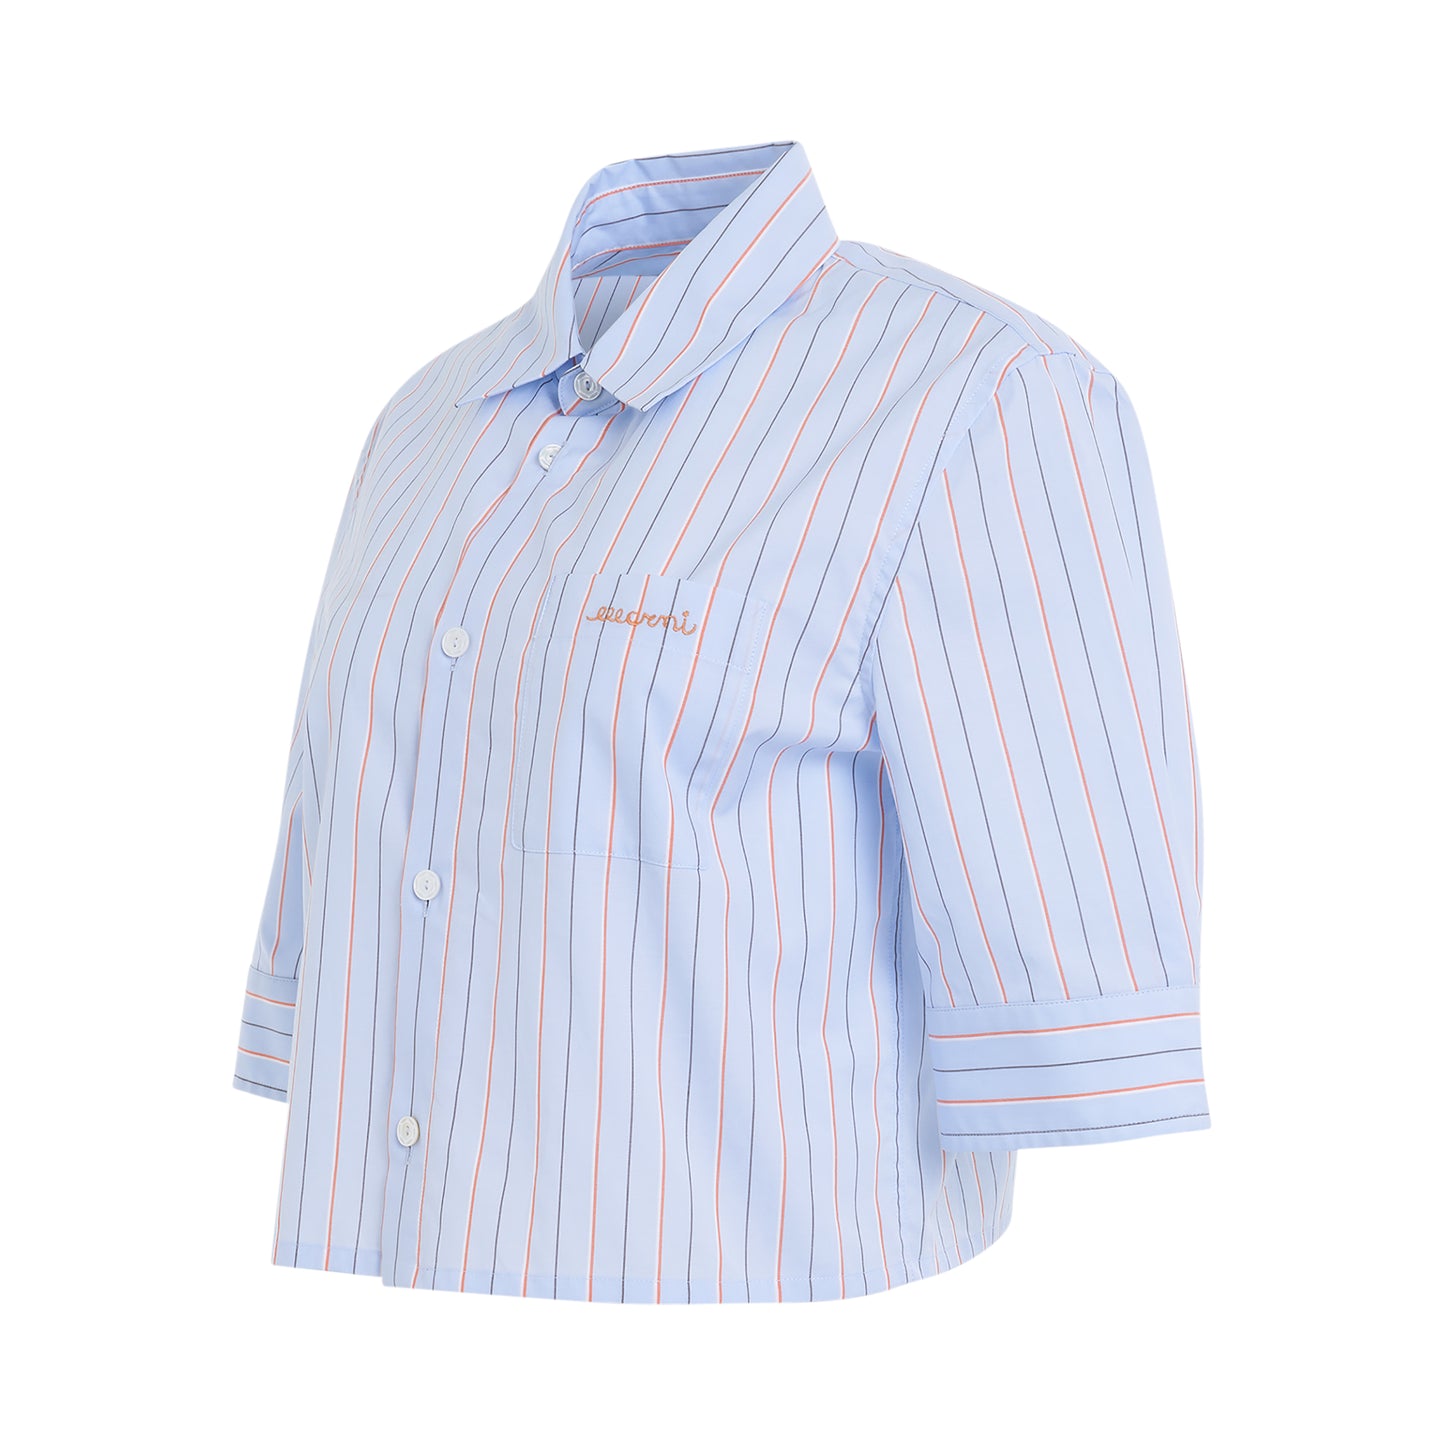 Stripe Print Cropped Shirt in Iris Blue